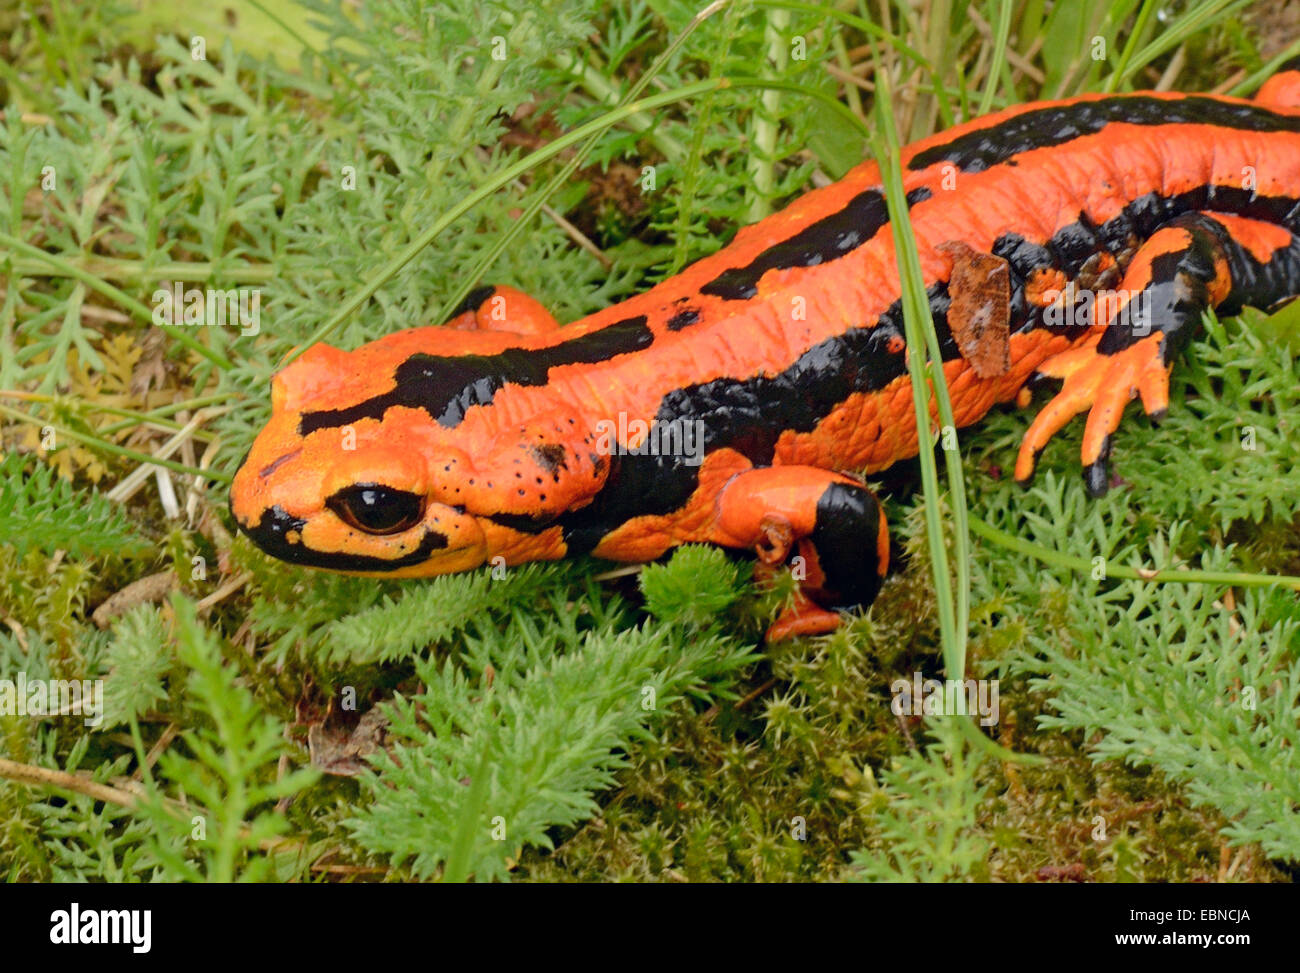 European fire salamander (Salamandra salamandra), red morph with stripes, Germany Stock Photo